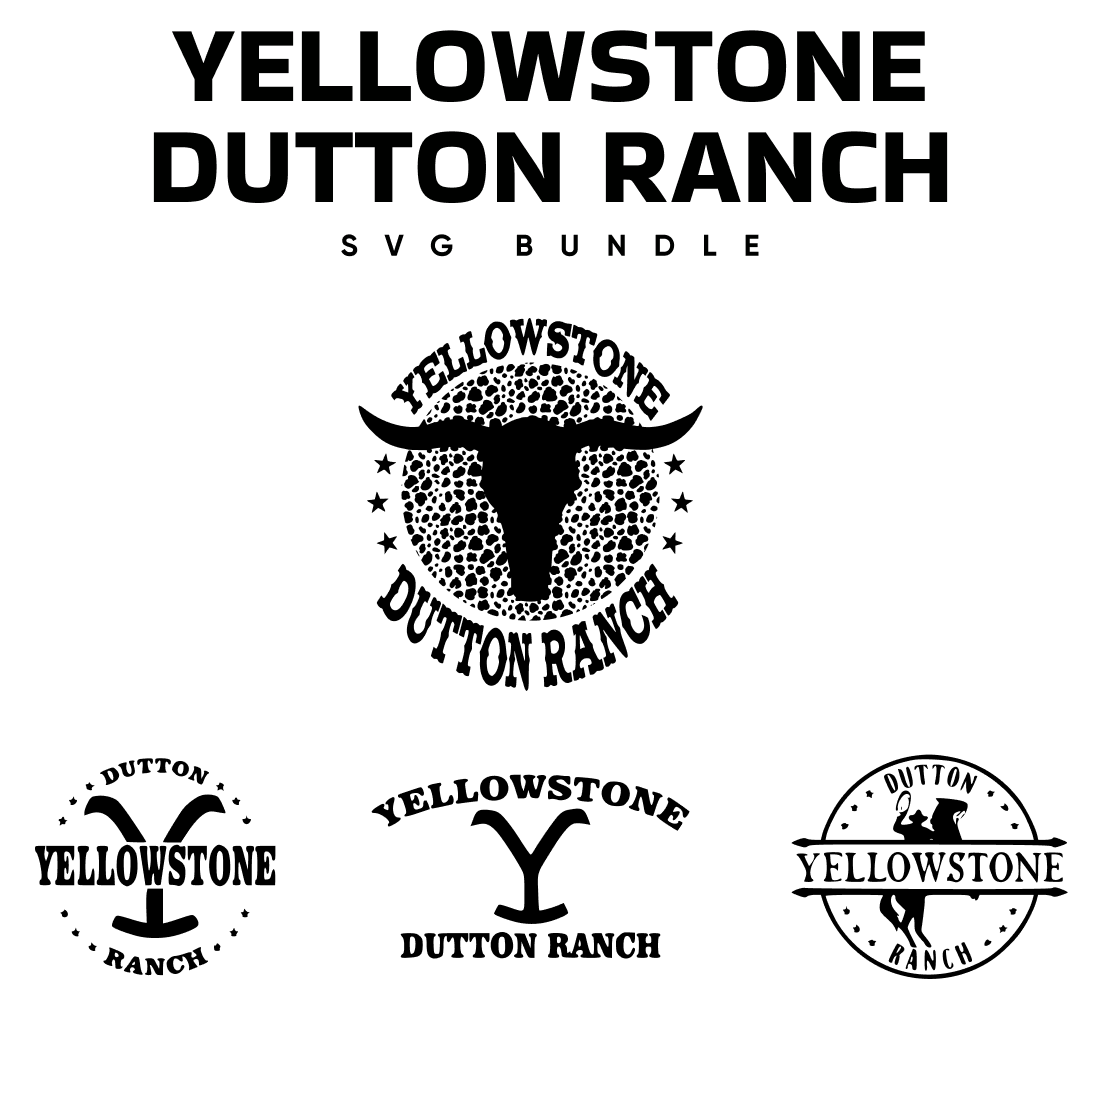 Yellowstone Dutton Ranch SVG.